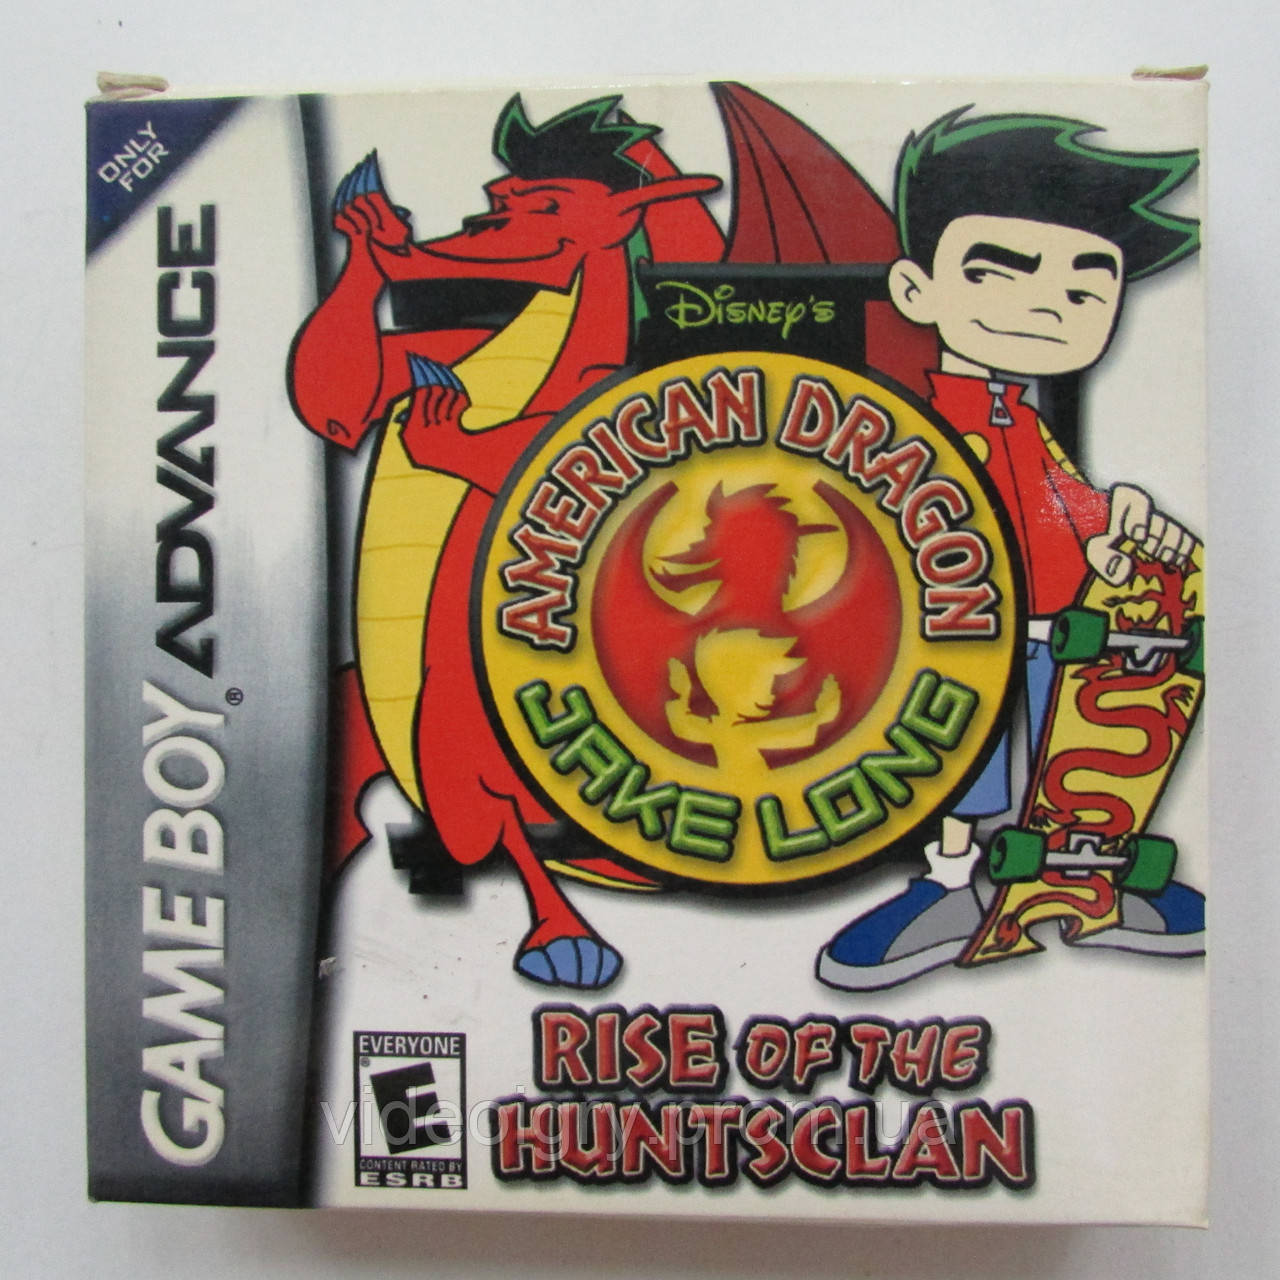 Disney's American Dragon: Jake Long, Rise of the Huntsclan картридж Game Boy Advance (GBA)